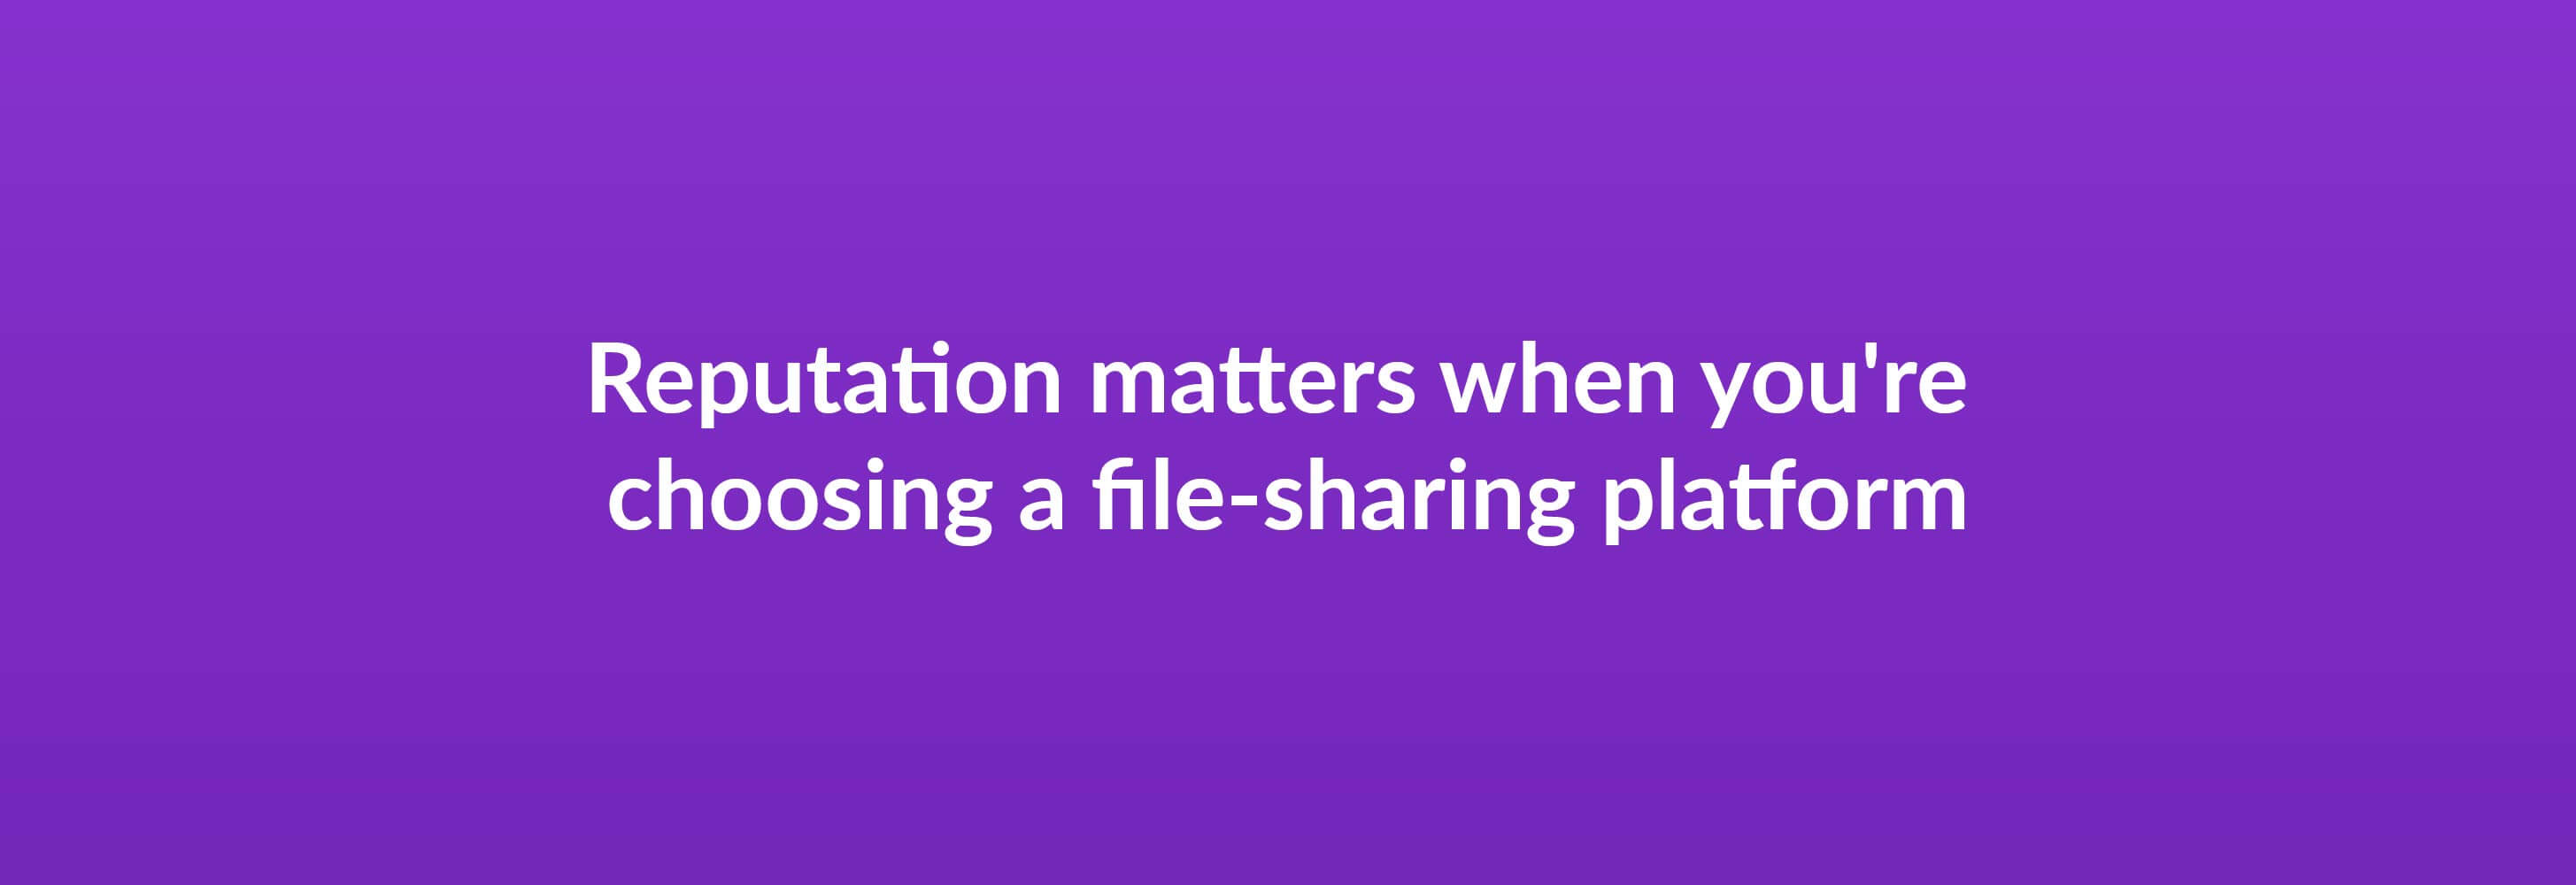 Reputation matters when you're choosing a file-sharing platform